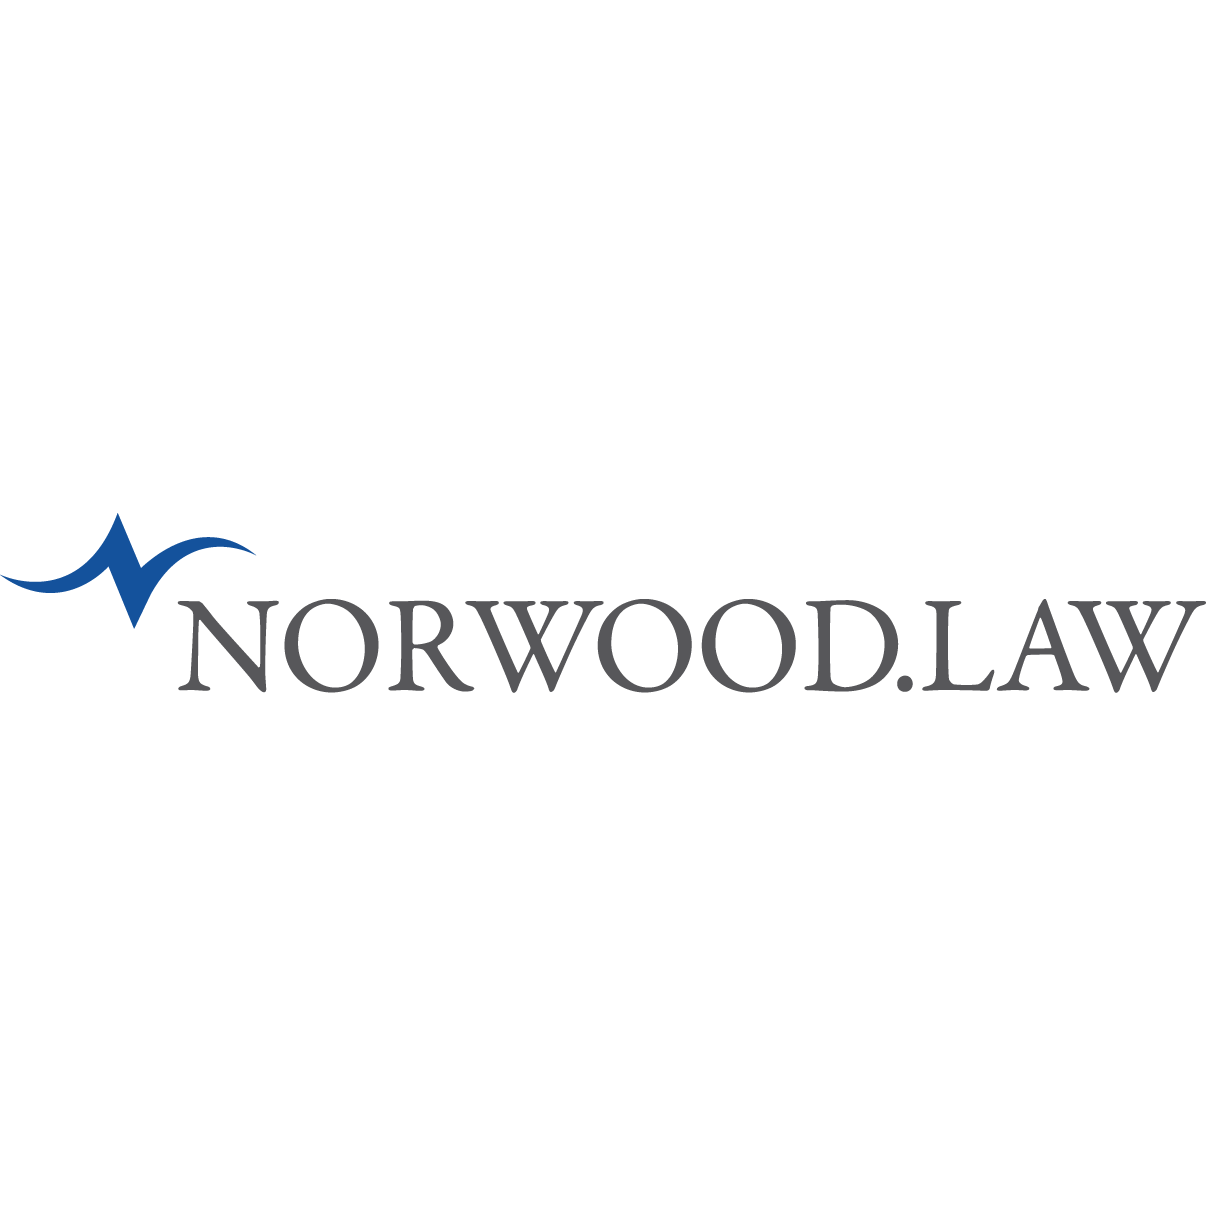 Norwood Law Firm P.C. - Tulsa, OK 74119 - (918)582-6464 | ShowMeLocal.com